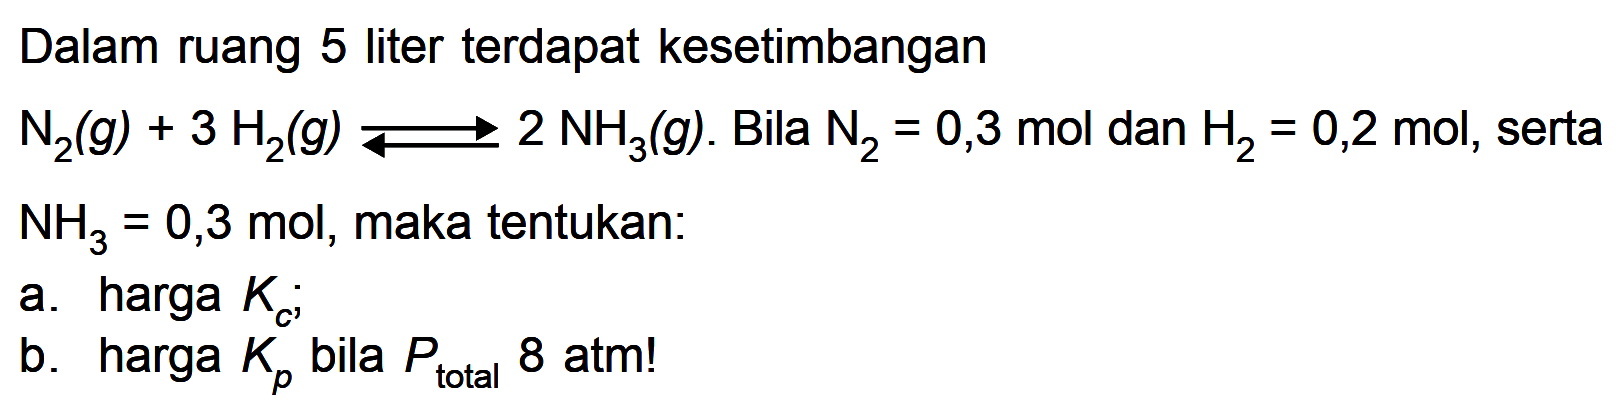 Dalam ruang 5 liter terdapat kesetimbangan N2 (g) + 3 H2 (g) <=> 2 NH3 (g). Bila N2 = 0,3 mol dan H2 = 0,2 mol, serta NH3 = 0,3 mol, maka tentukan: a. harga Kc; b. harga Kp bila Ptotal 8 atm!